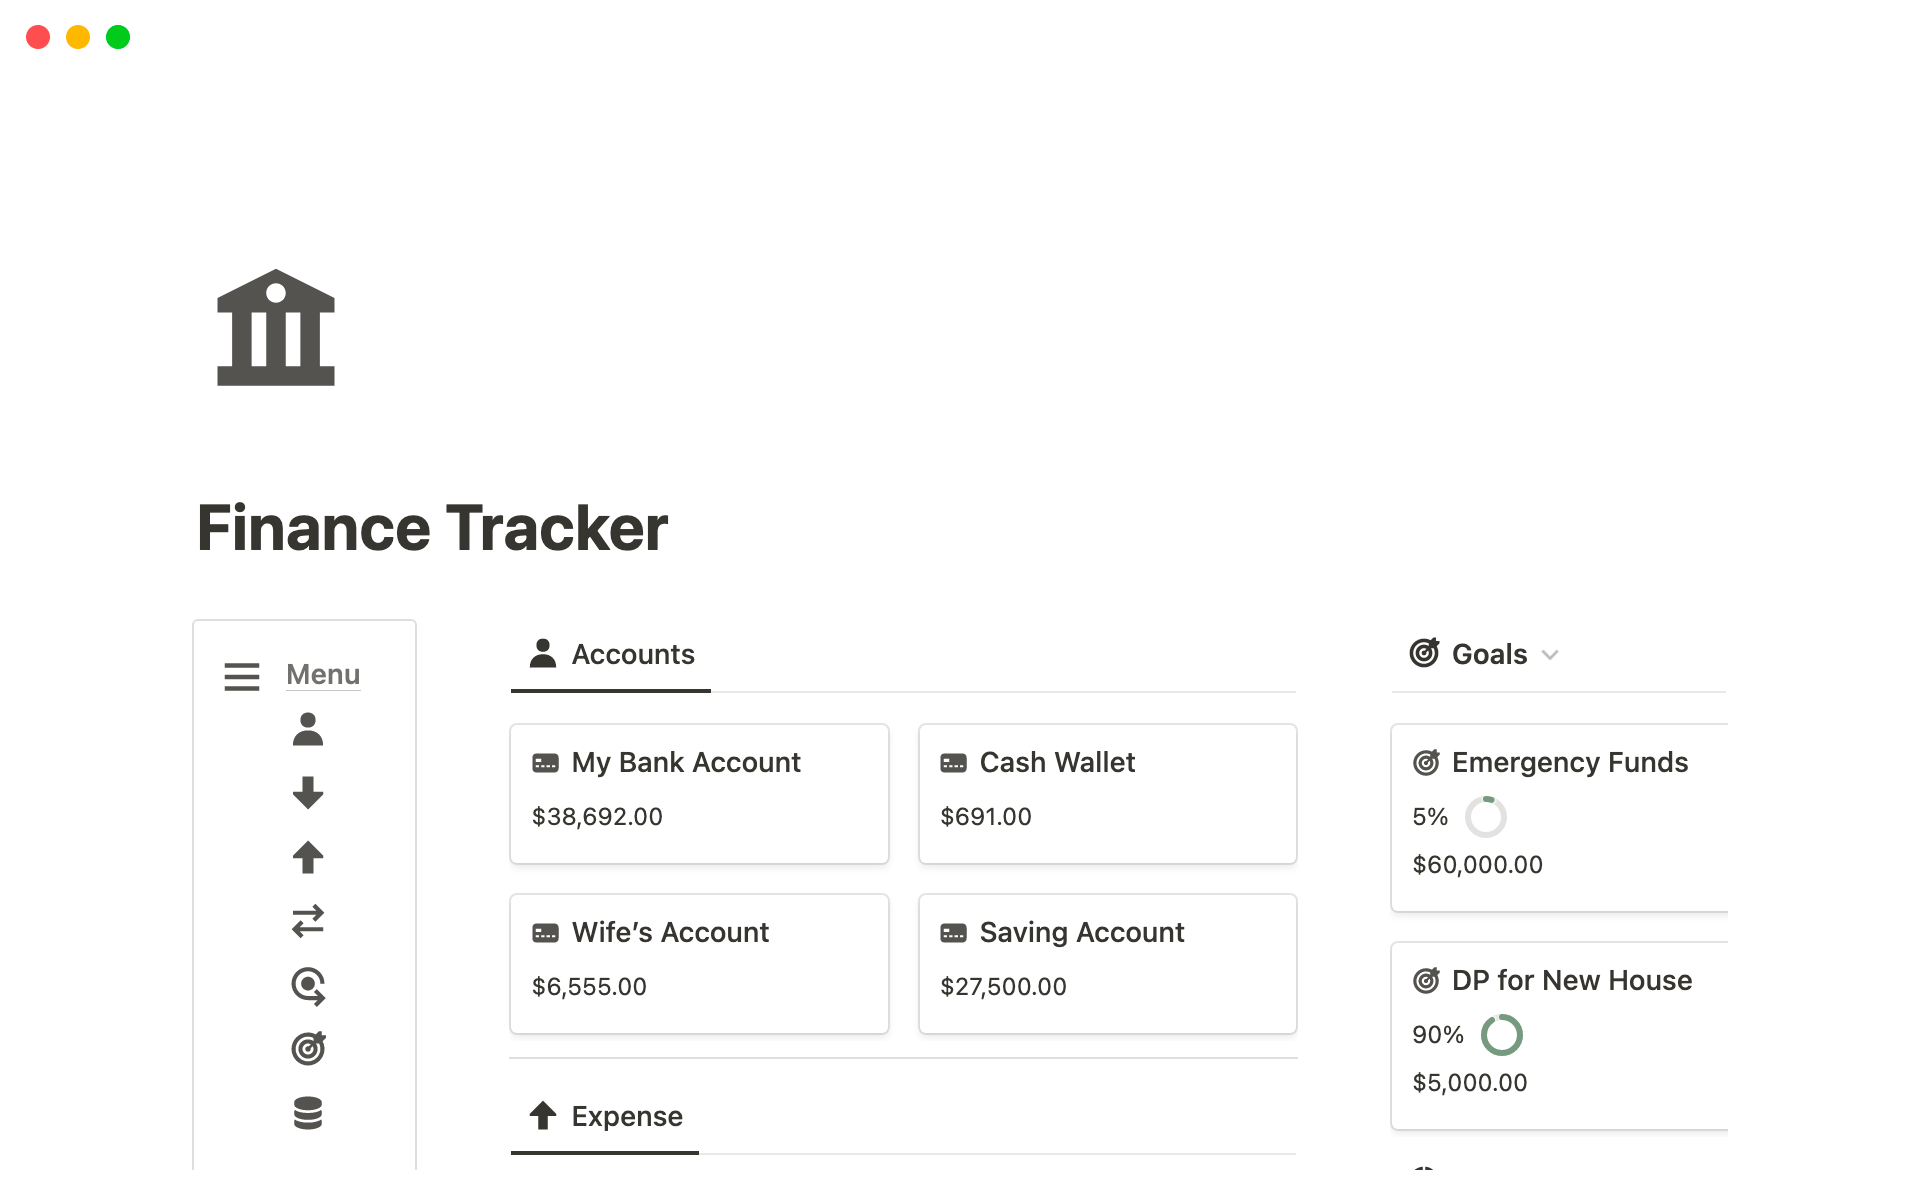 Finance Tracker by Rosidssoyのテンプレートのプレビュー